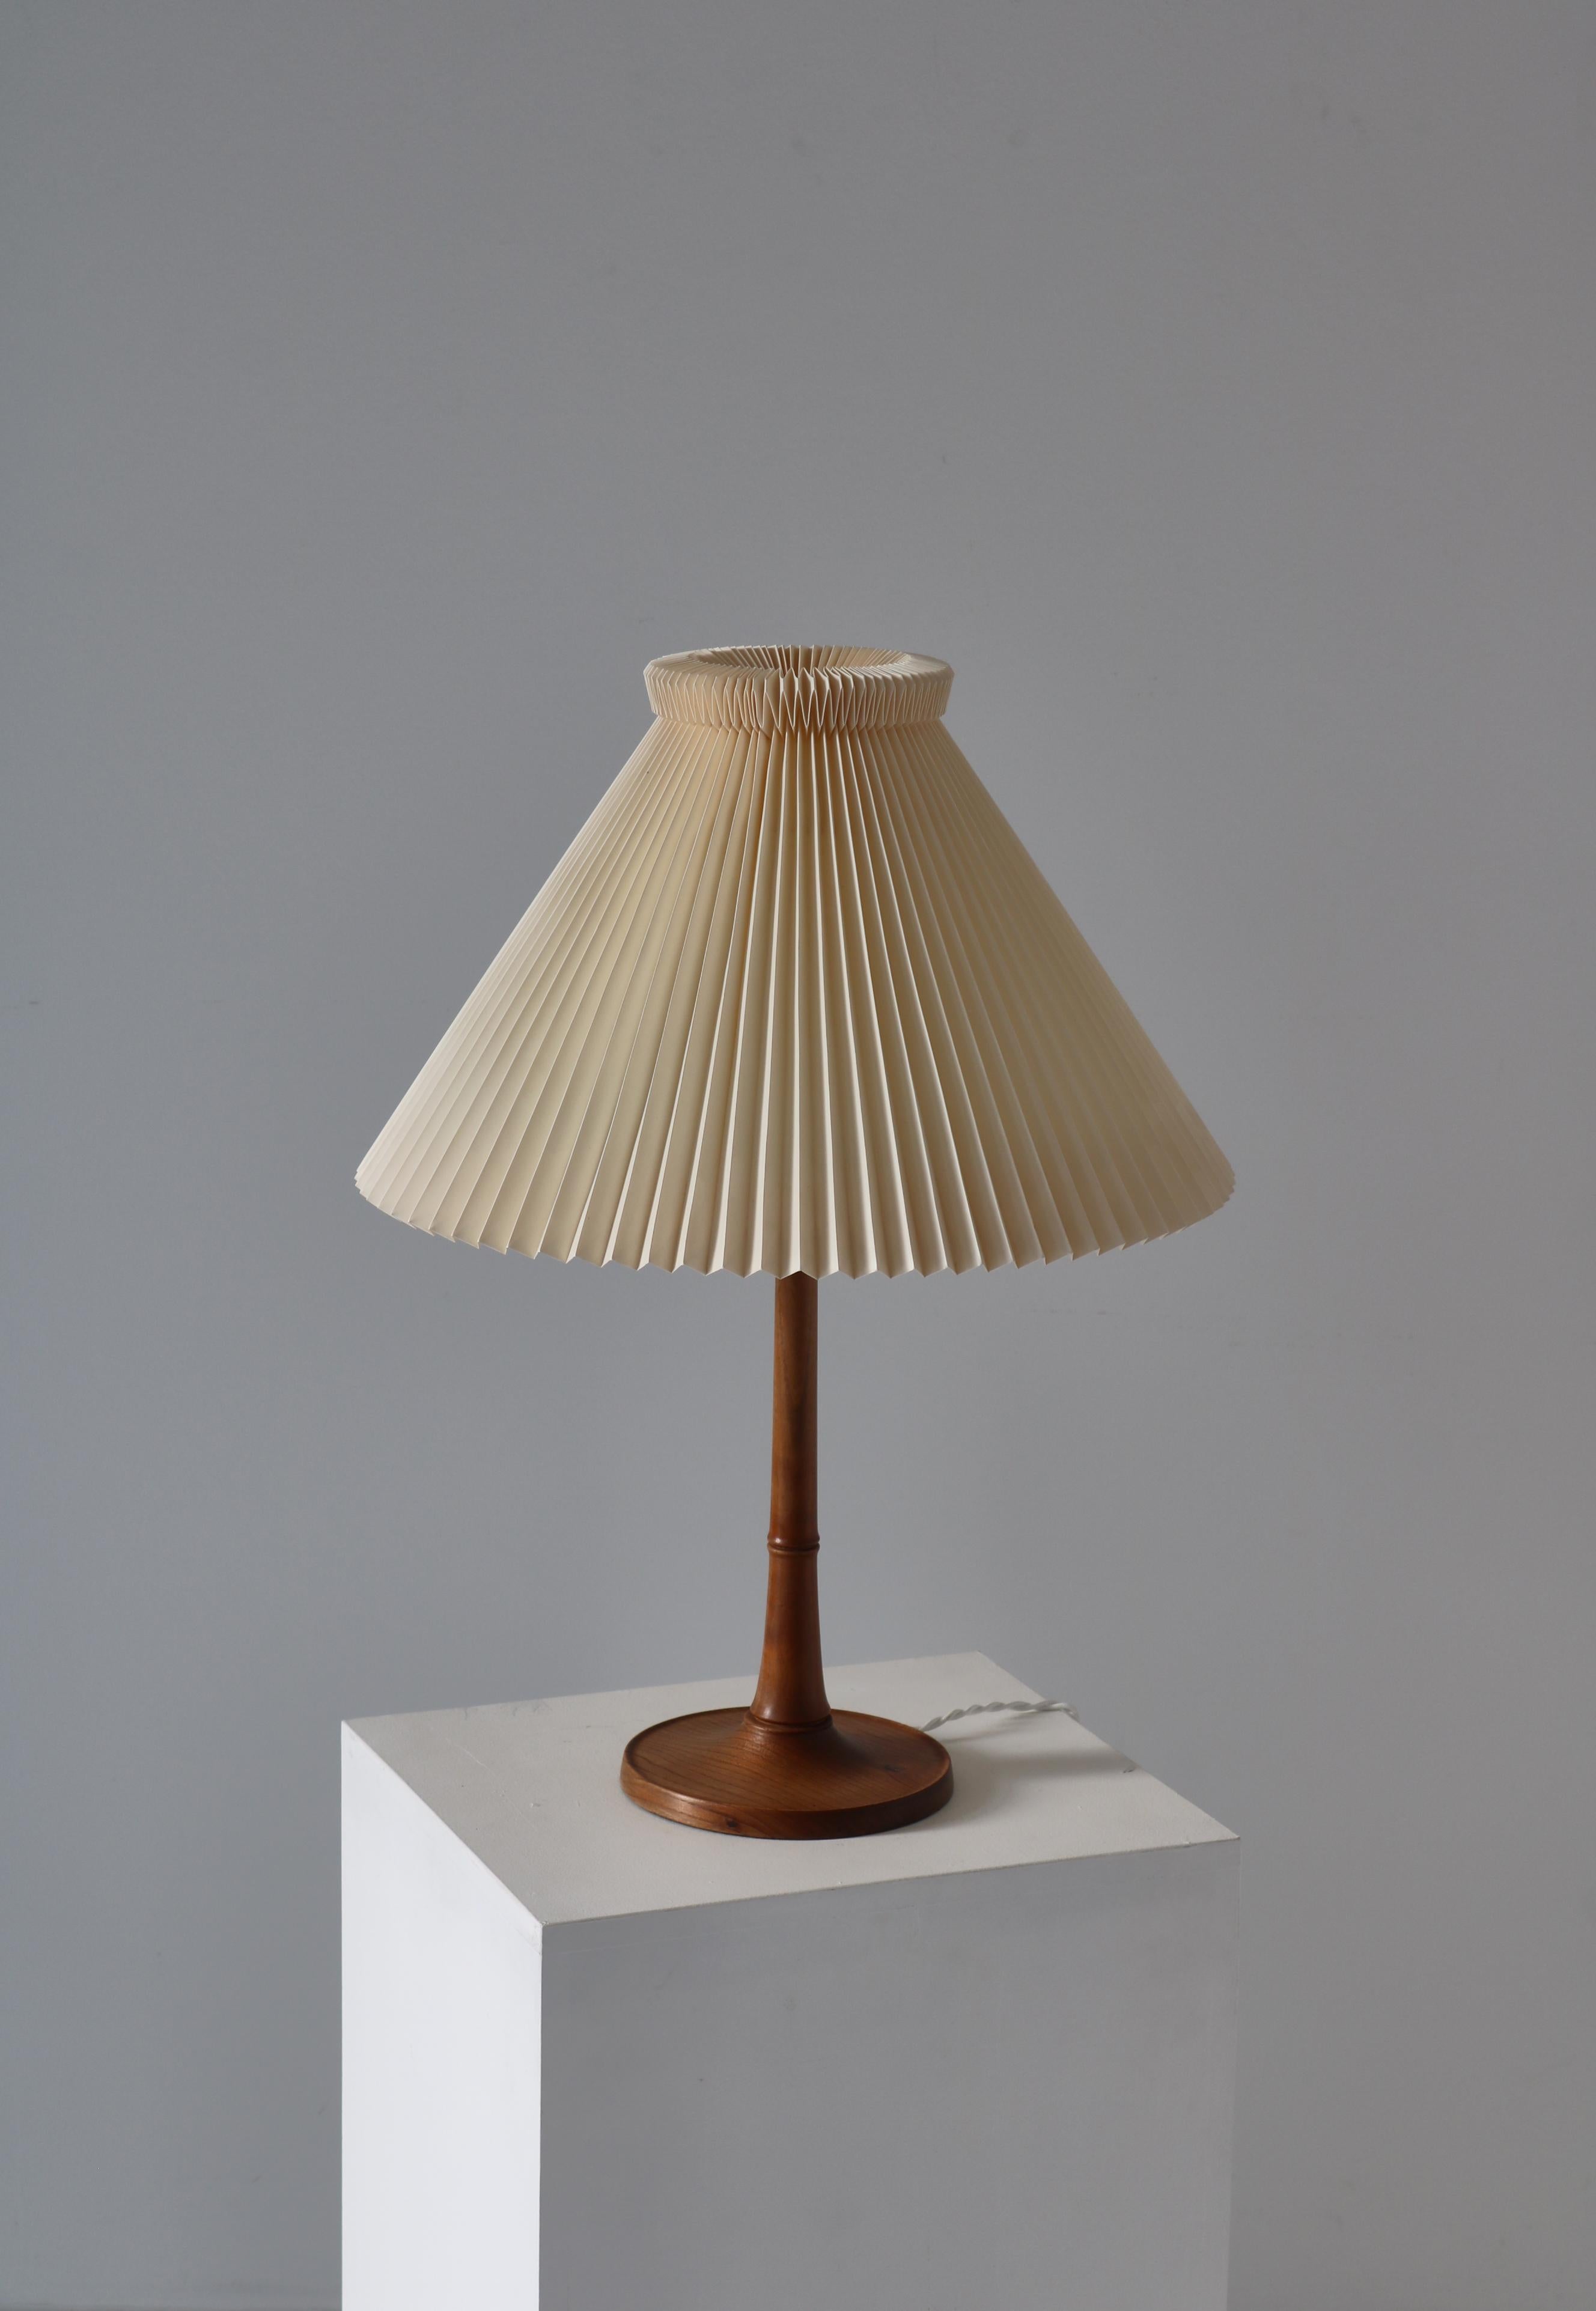 Danish Kaare Klint Table Lamp in Ash Wood and Hand Folded Le Klint Shade, Denmark 1940s For Sale